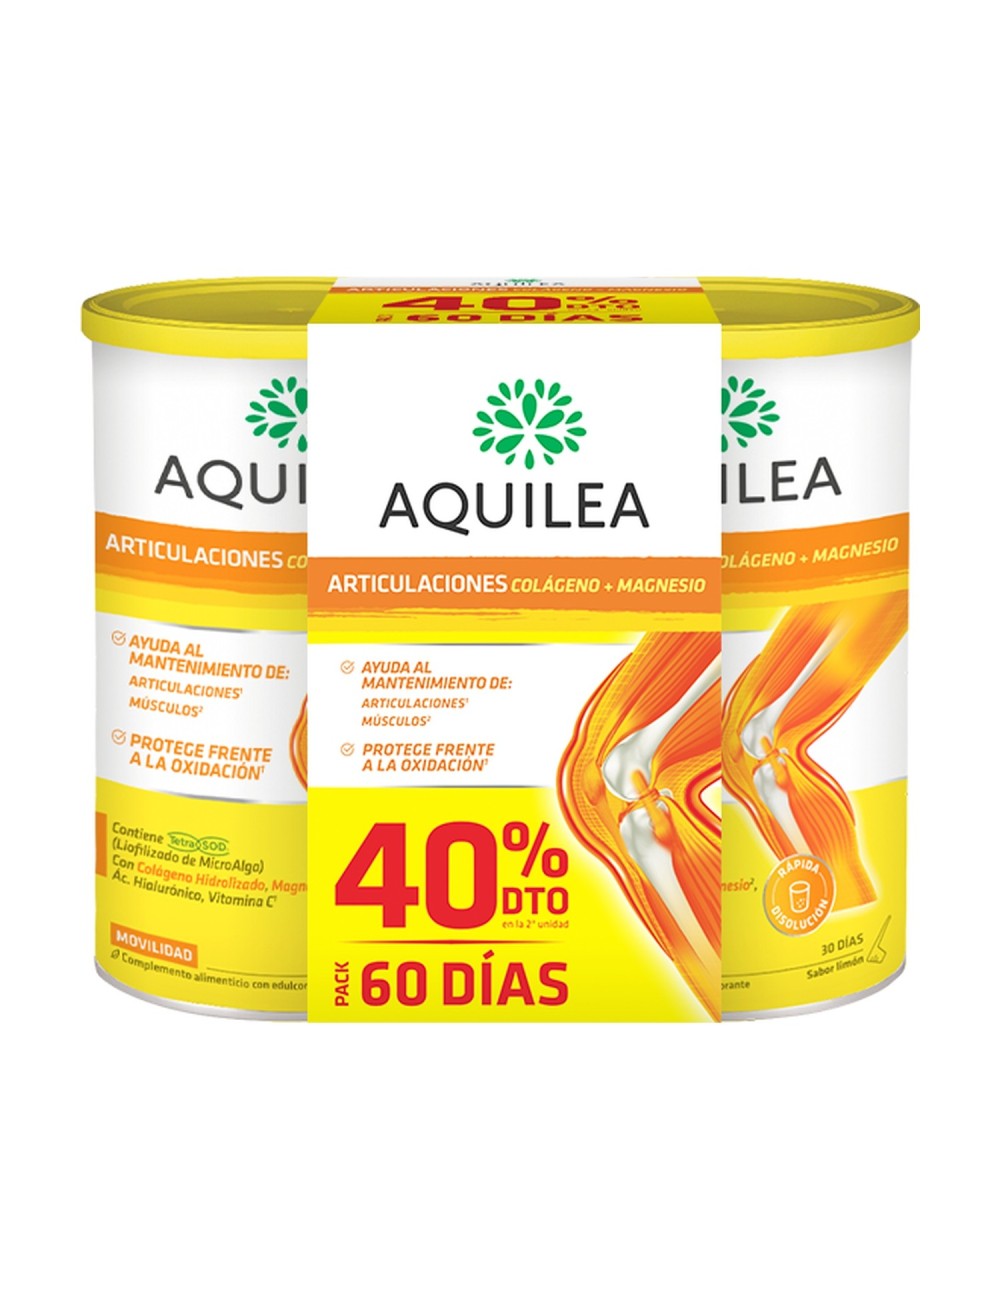 AQUILEA COLAGENO+MAGNESIO 40%DTO 2¬UD